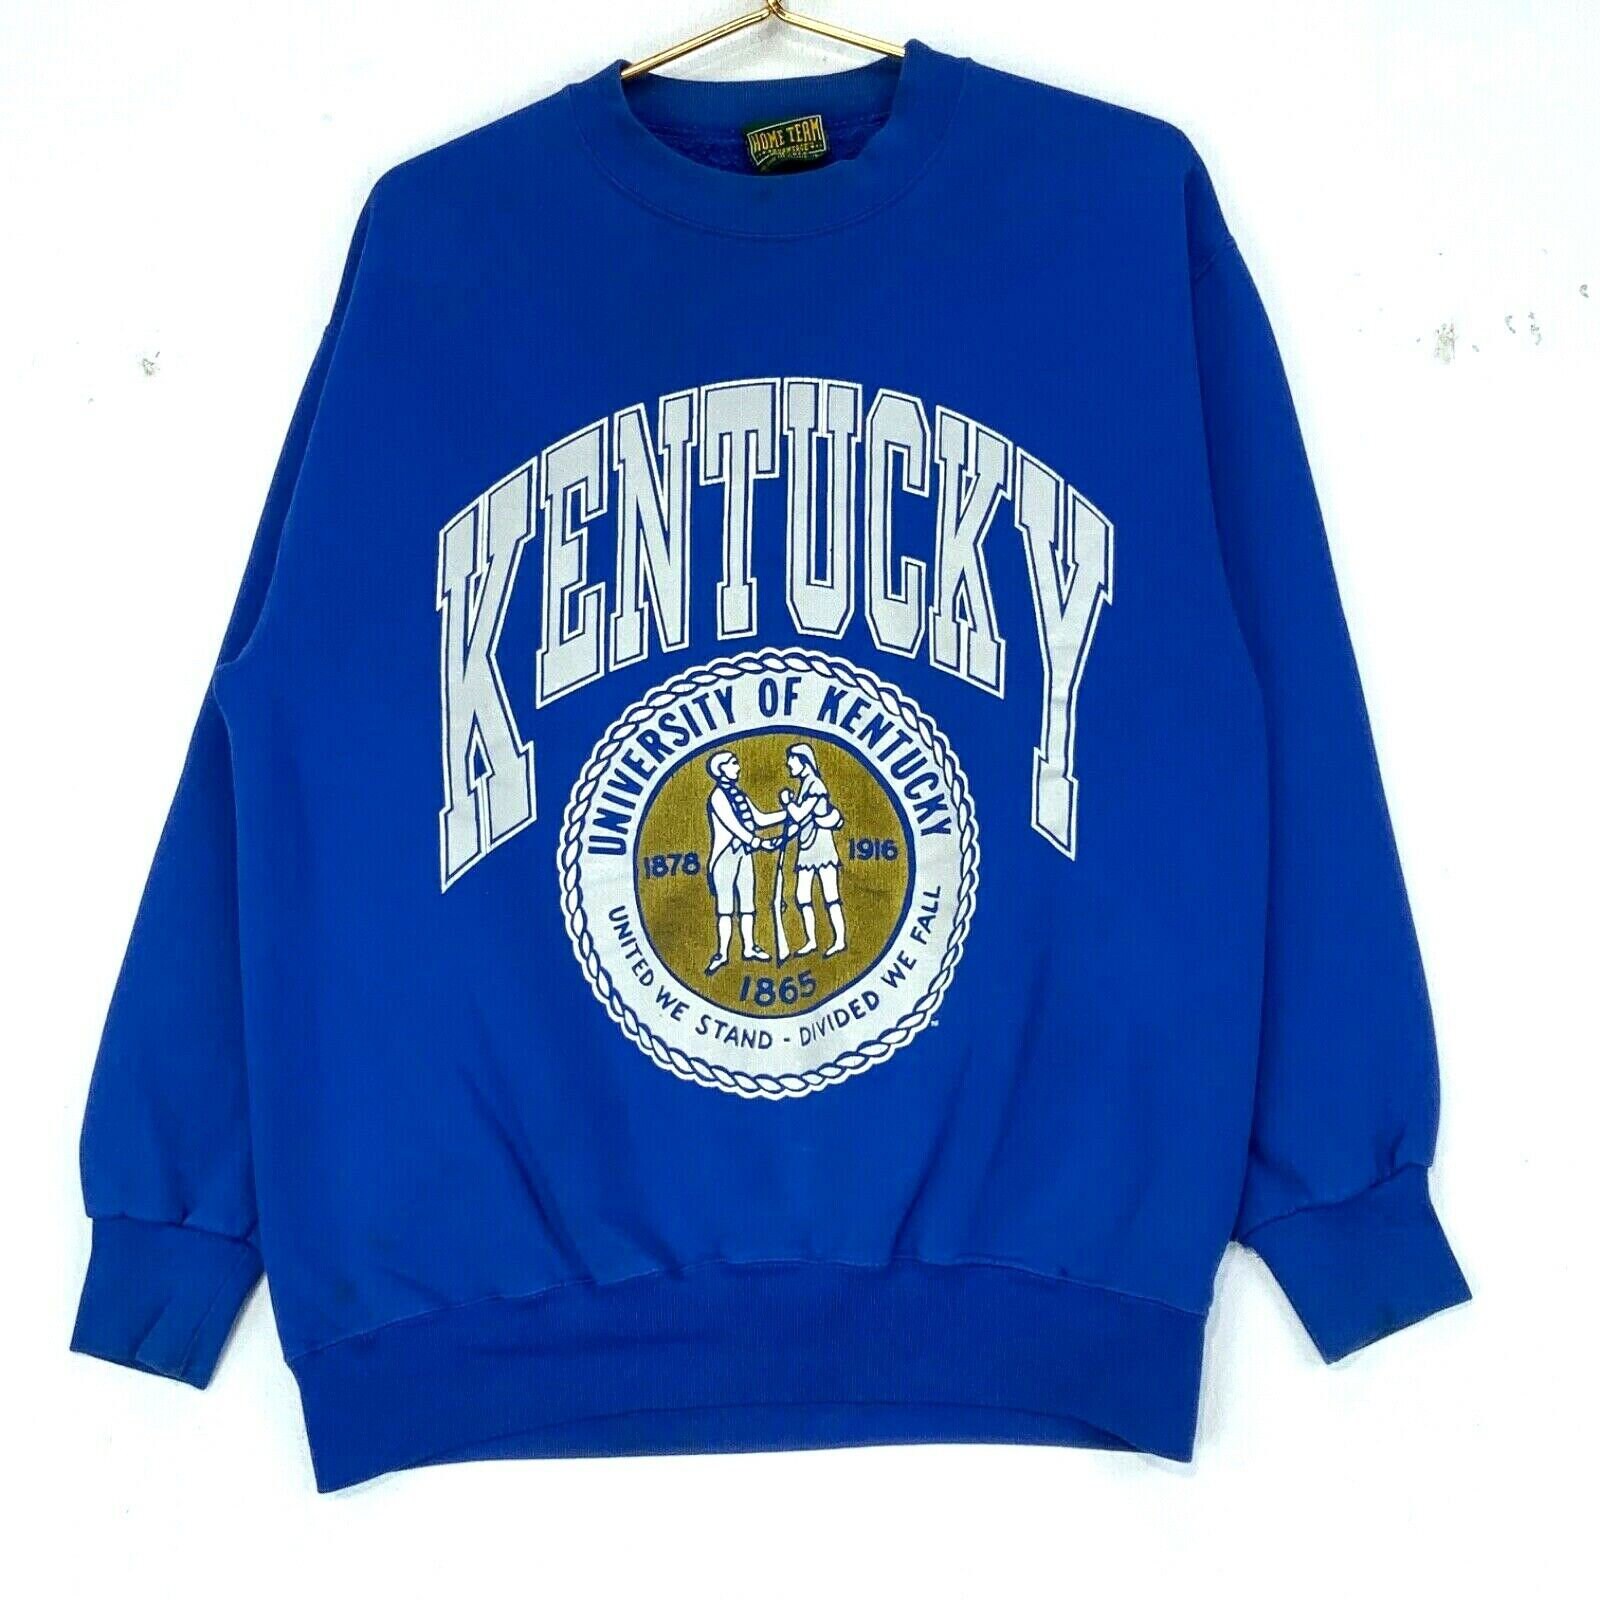 Free shipping 1960s vintage crewneck in blue with some cool patch mending Kleding Dameskleding Hoodies & Sweatshirts Sweatshirts 